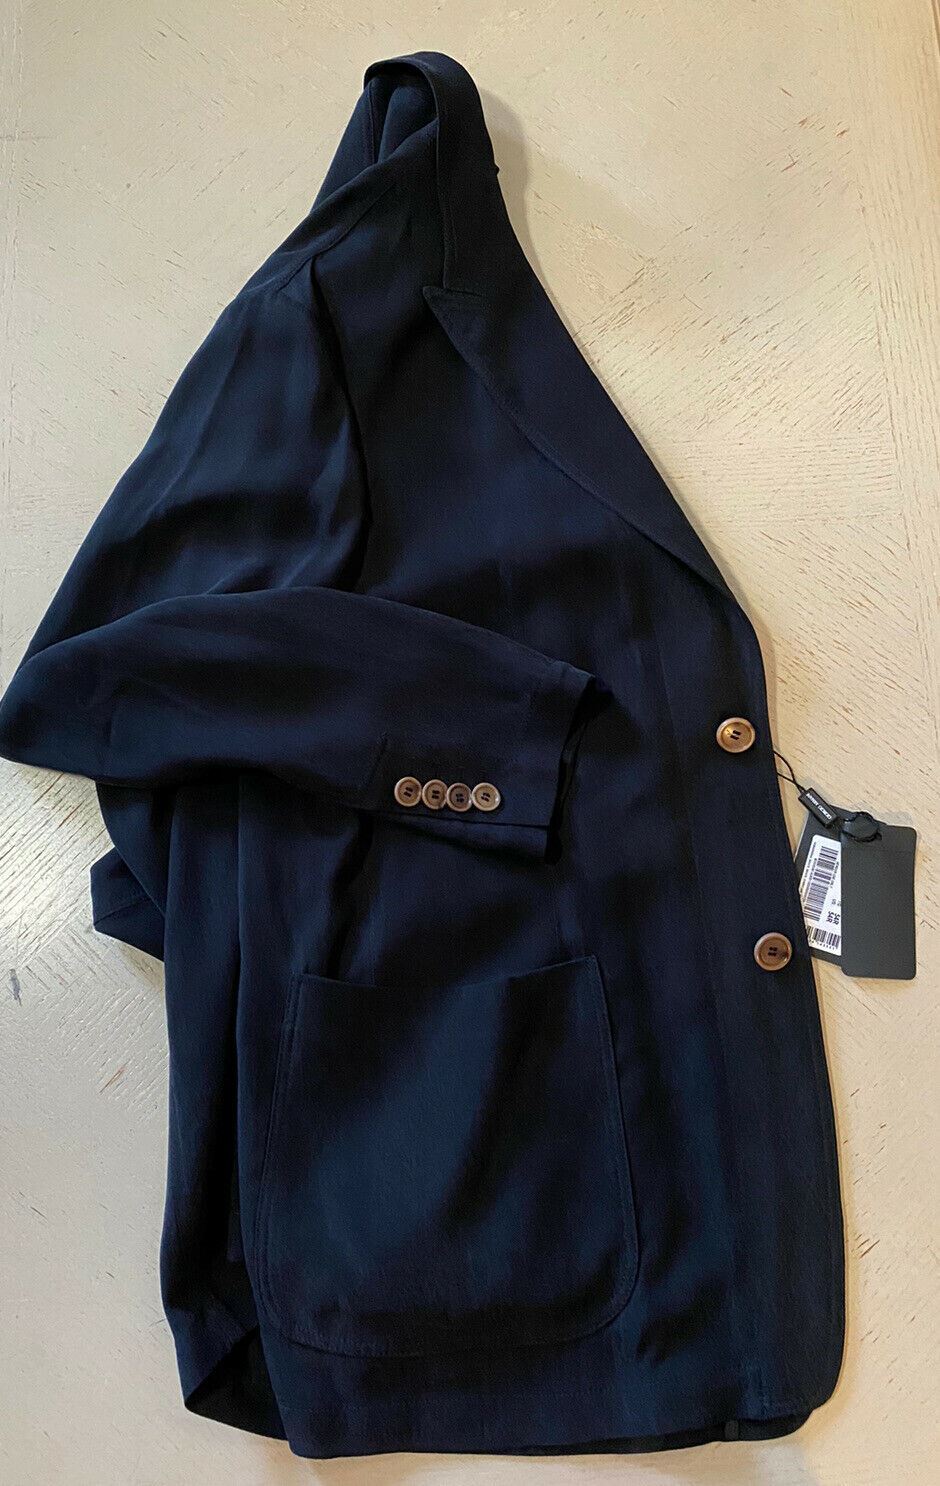 NWT $1895 Мужской пиджак Giorgio Armani Блейзер Темно-синий 44 США/54 ЕС Италия